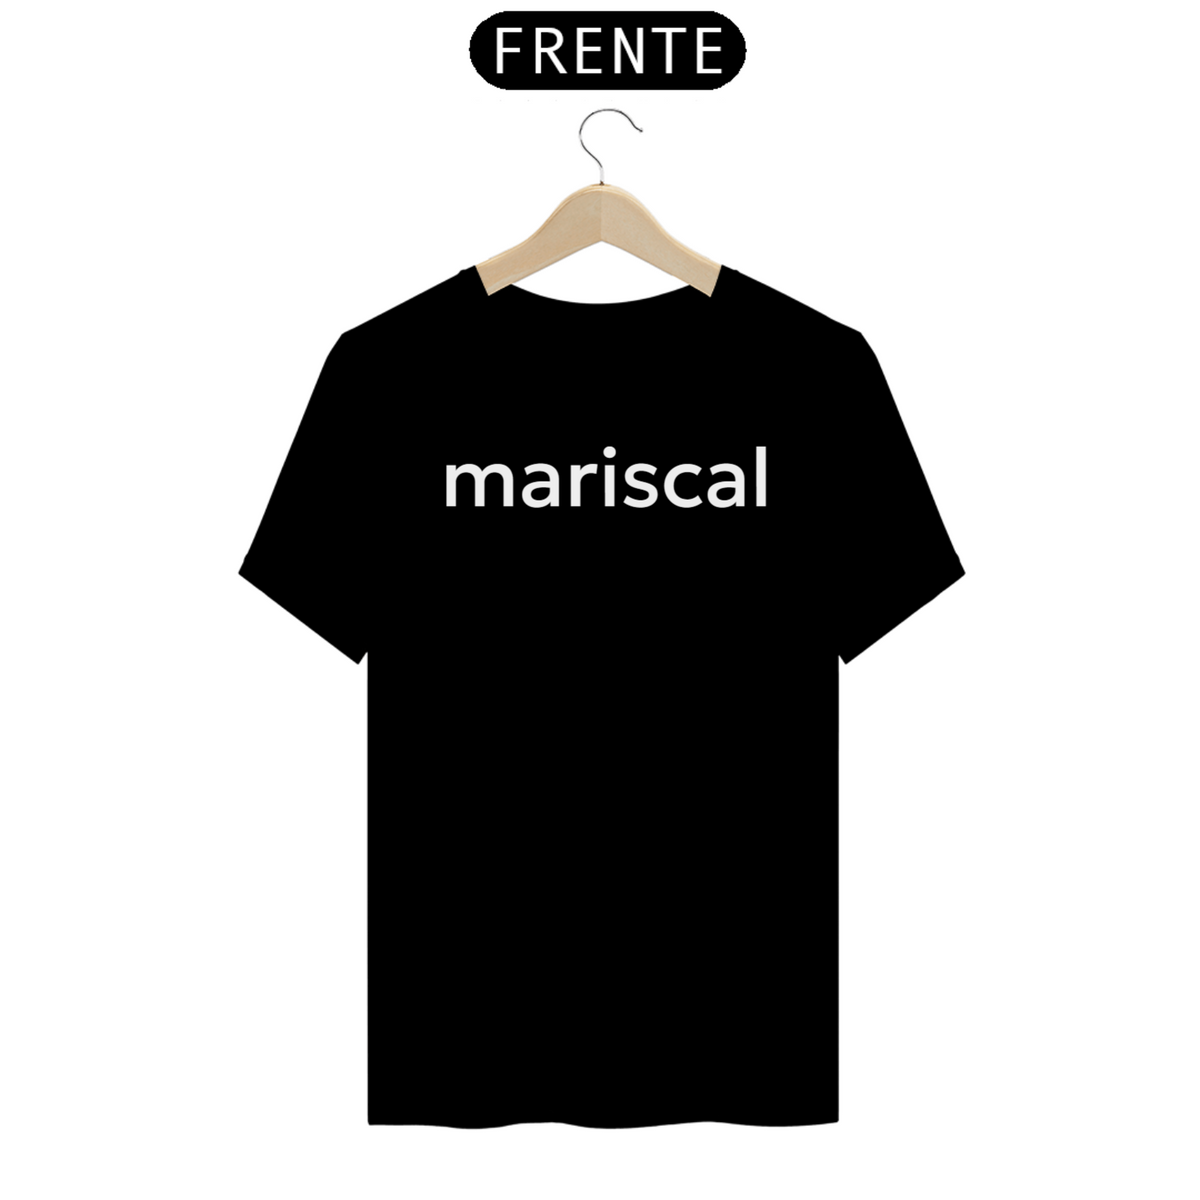 Nome do produto: Camiseta Mariscal 